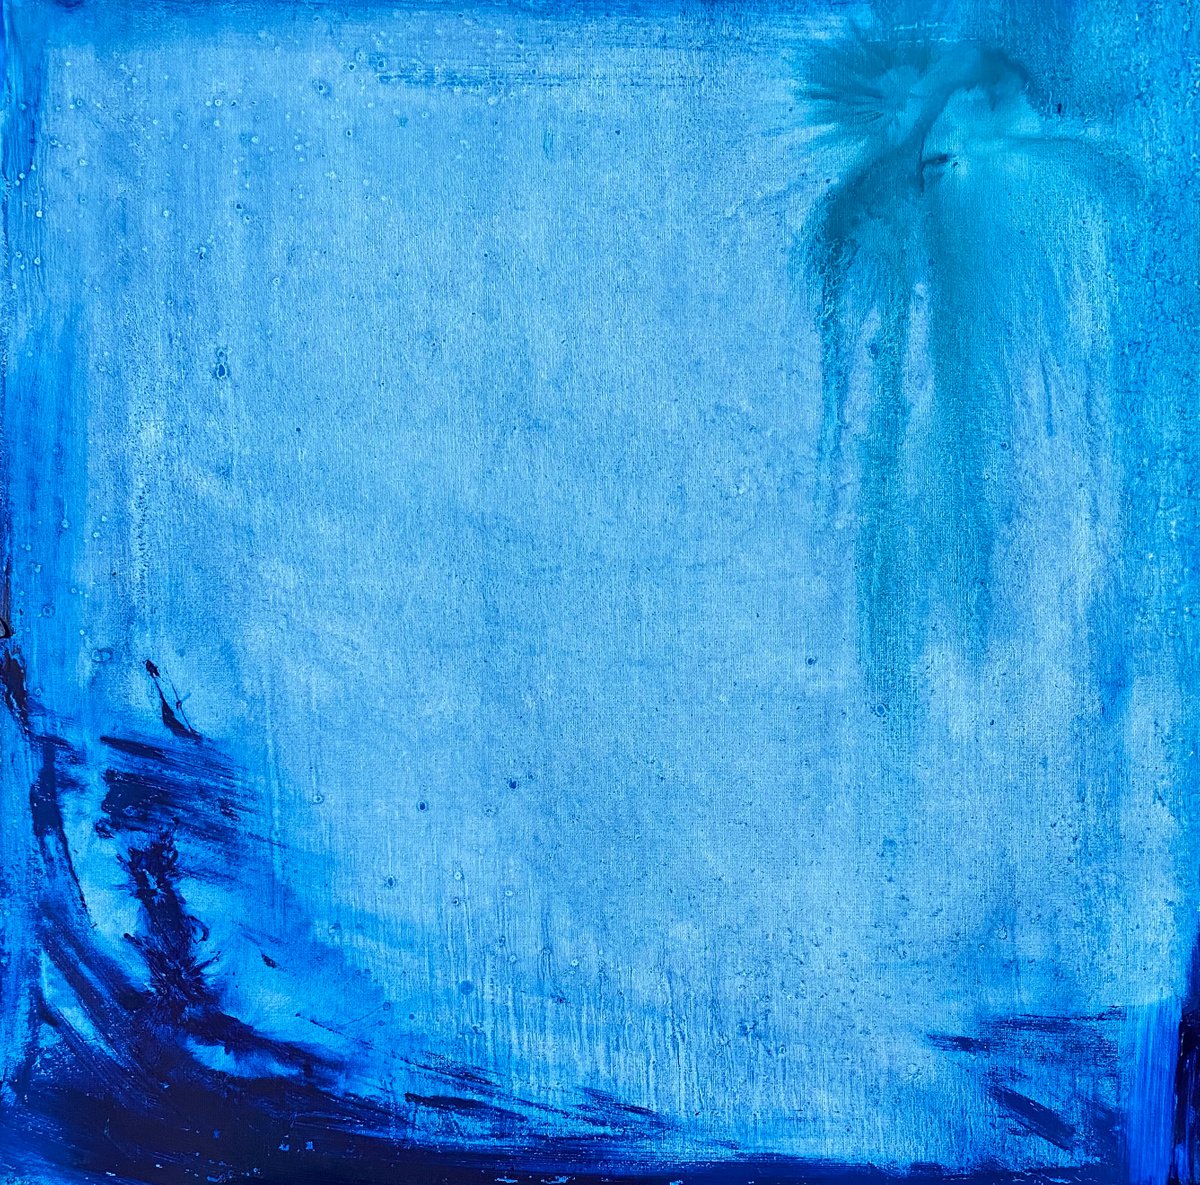 Blue abstract painting 2205202004 by Natalya Burgos